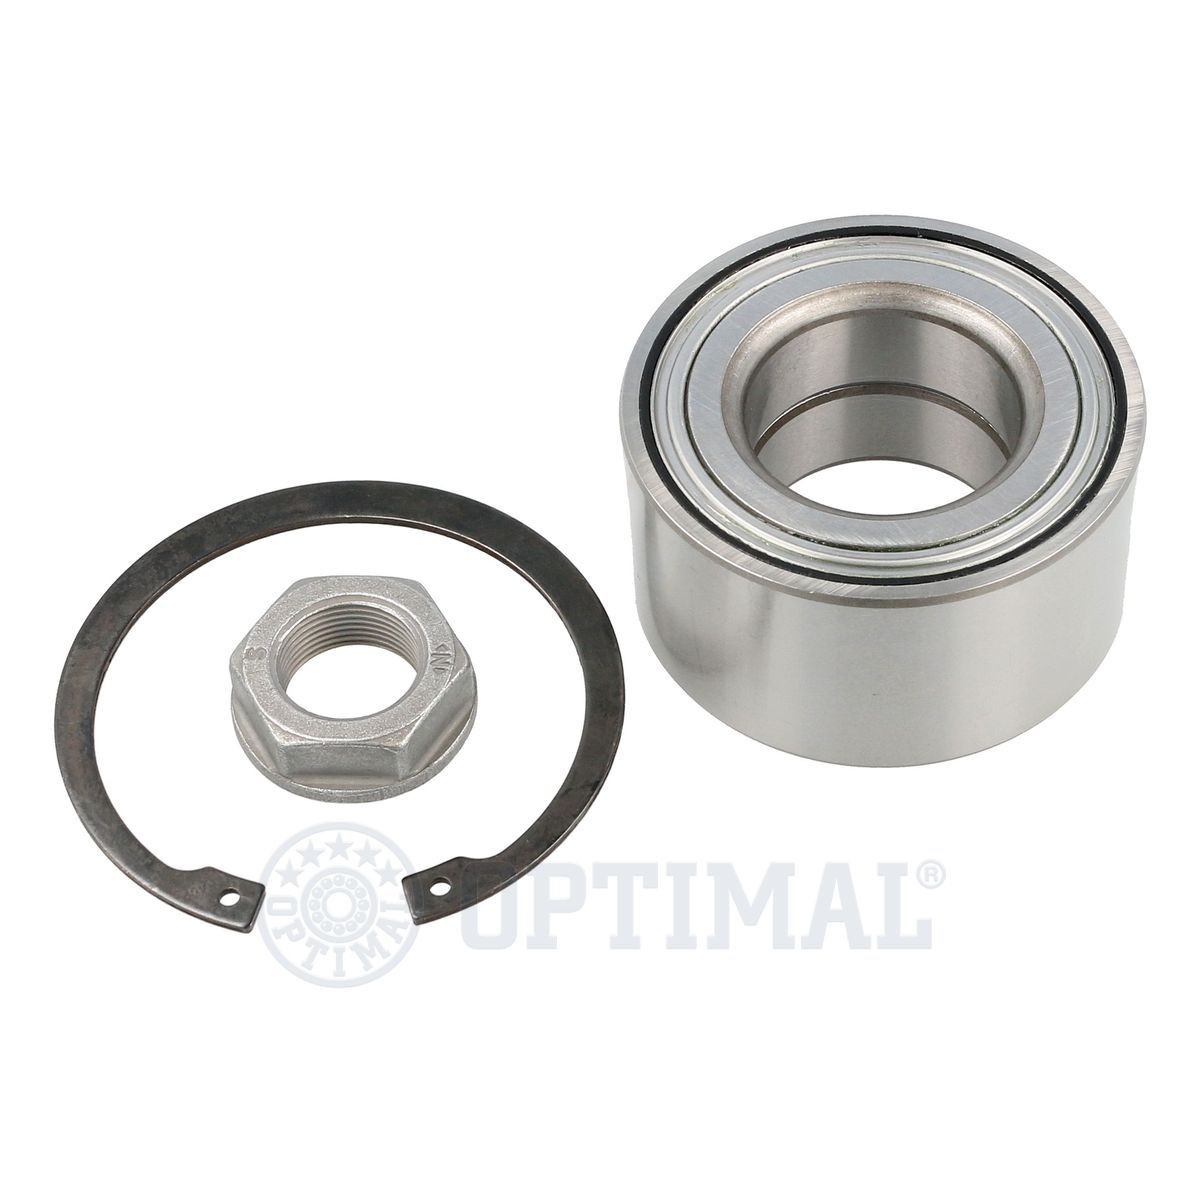 OPTIMAL 681913 Wheel bearing kit with integrated magnetic sensor ring, 86 mm